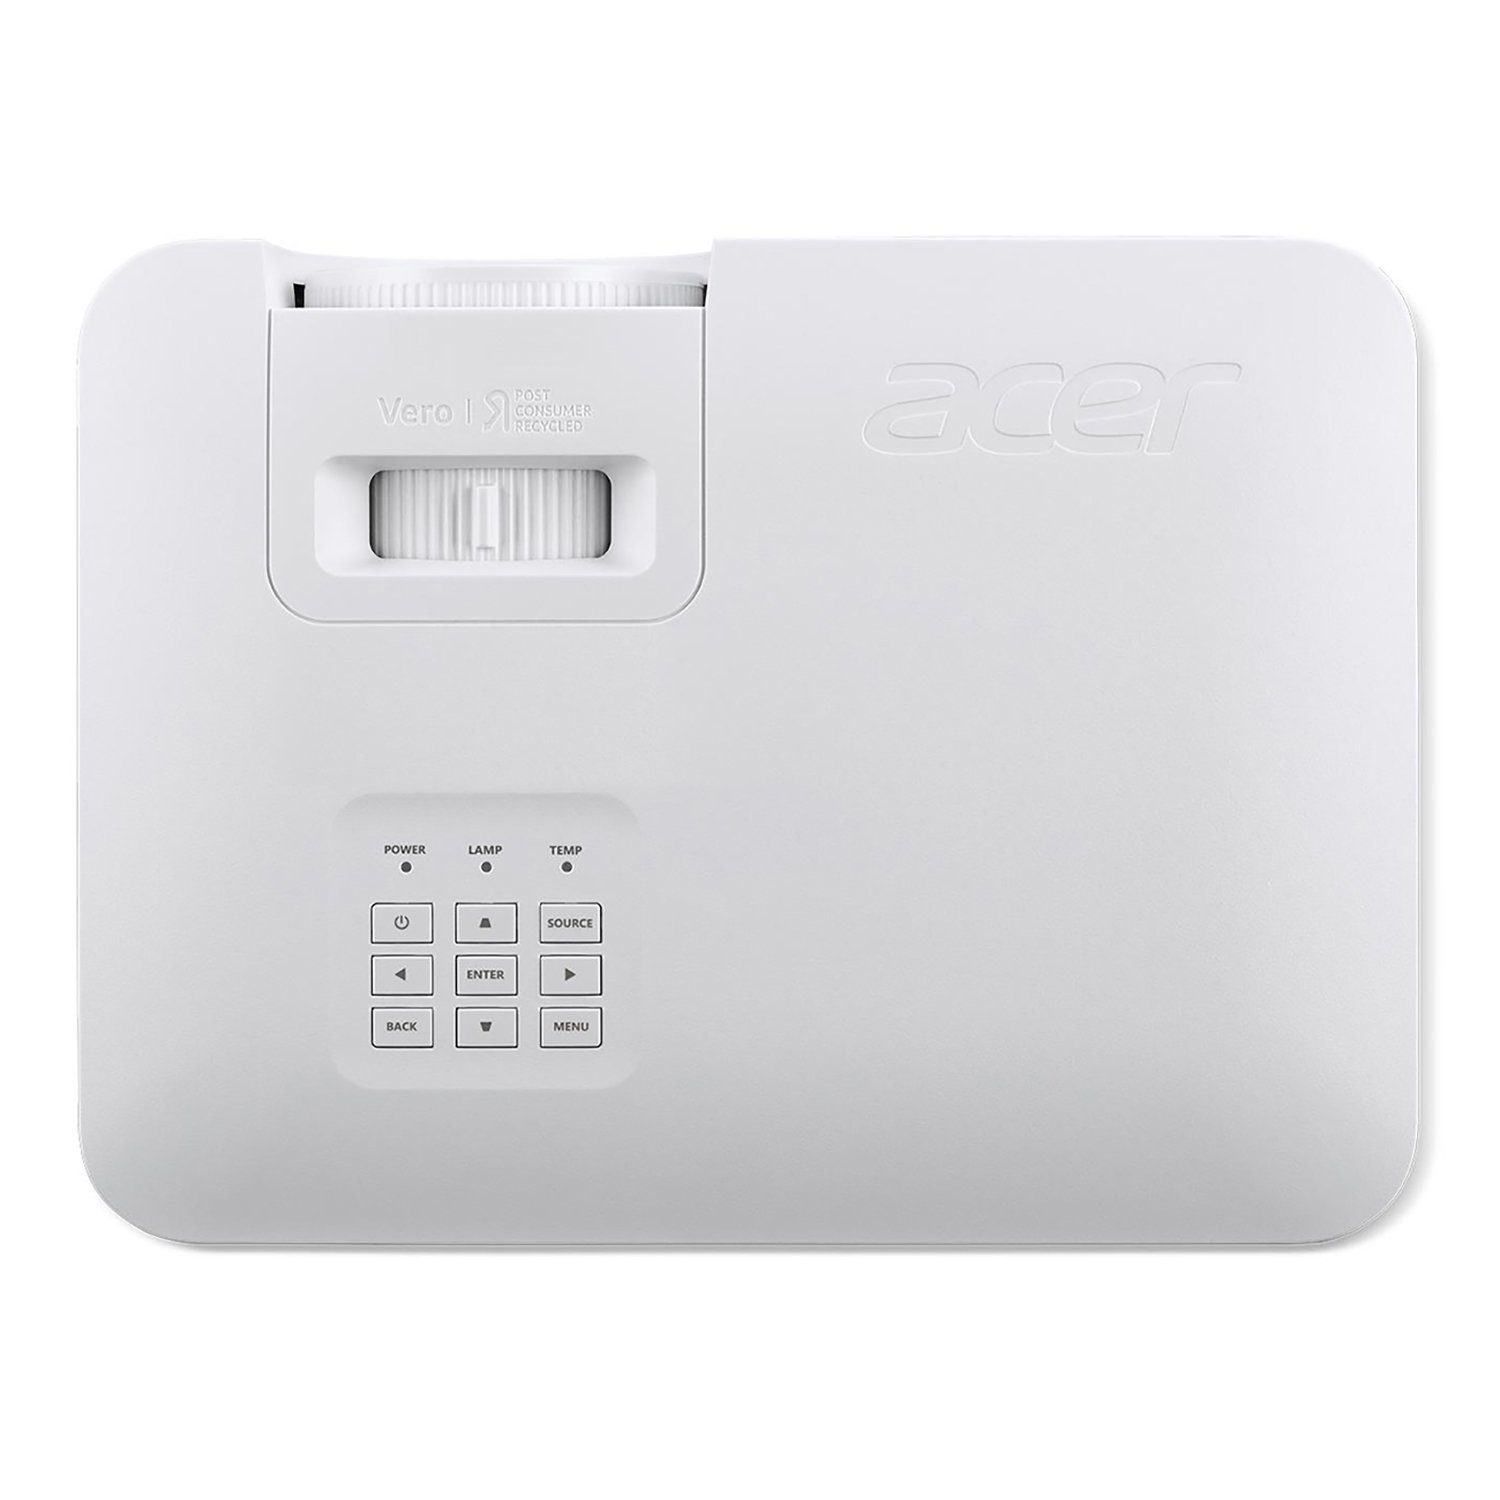 Acer Vero XL2330W Portabler 800 Projektor lm, px) (5000 50000:1, x 1280